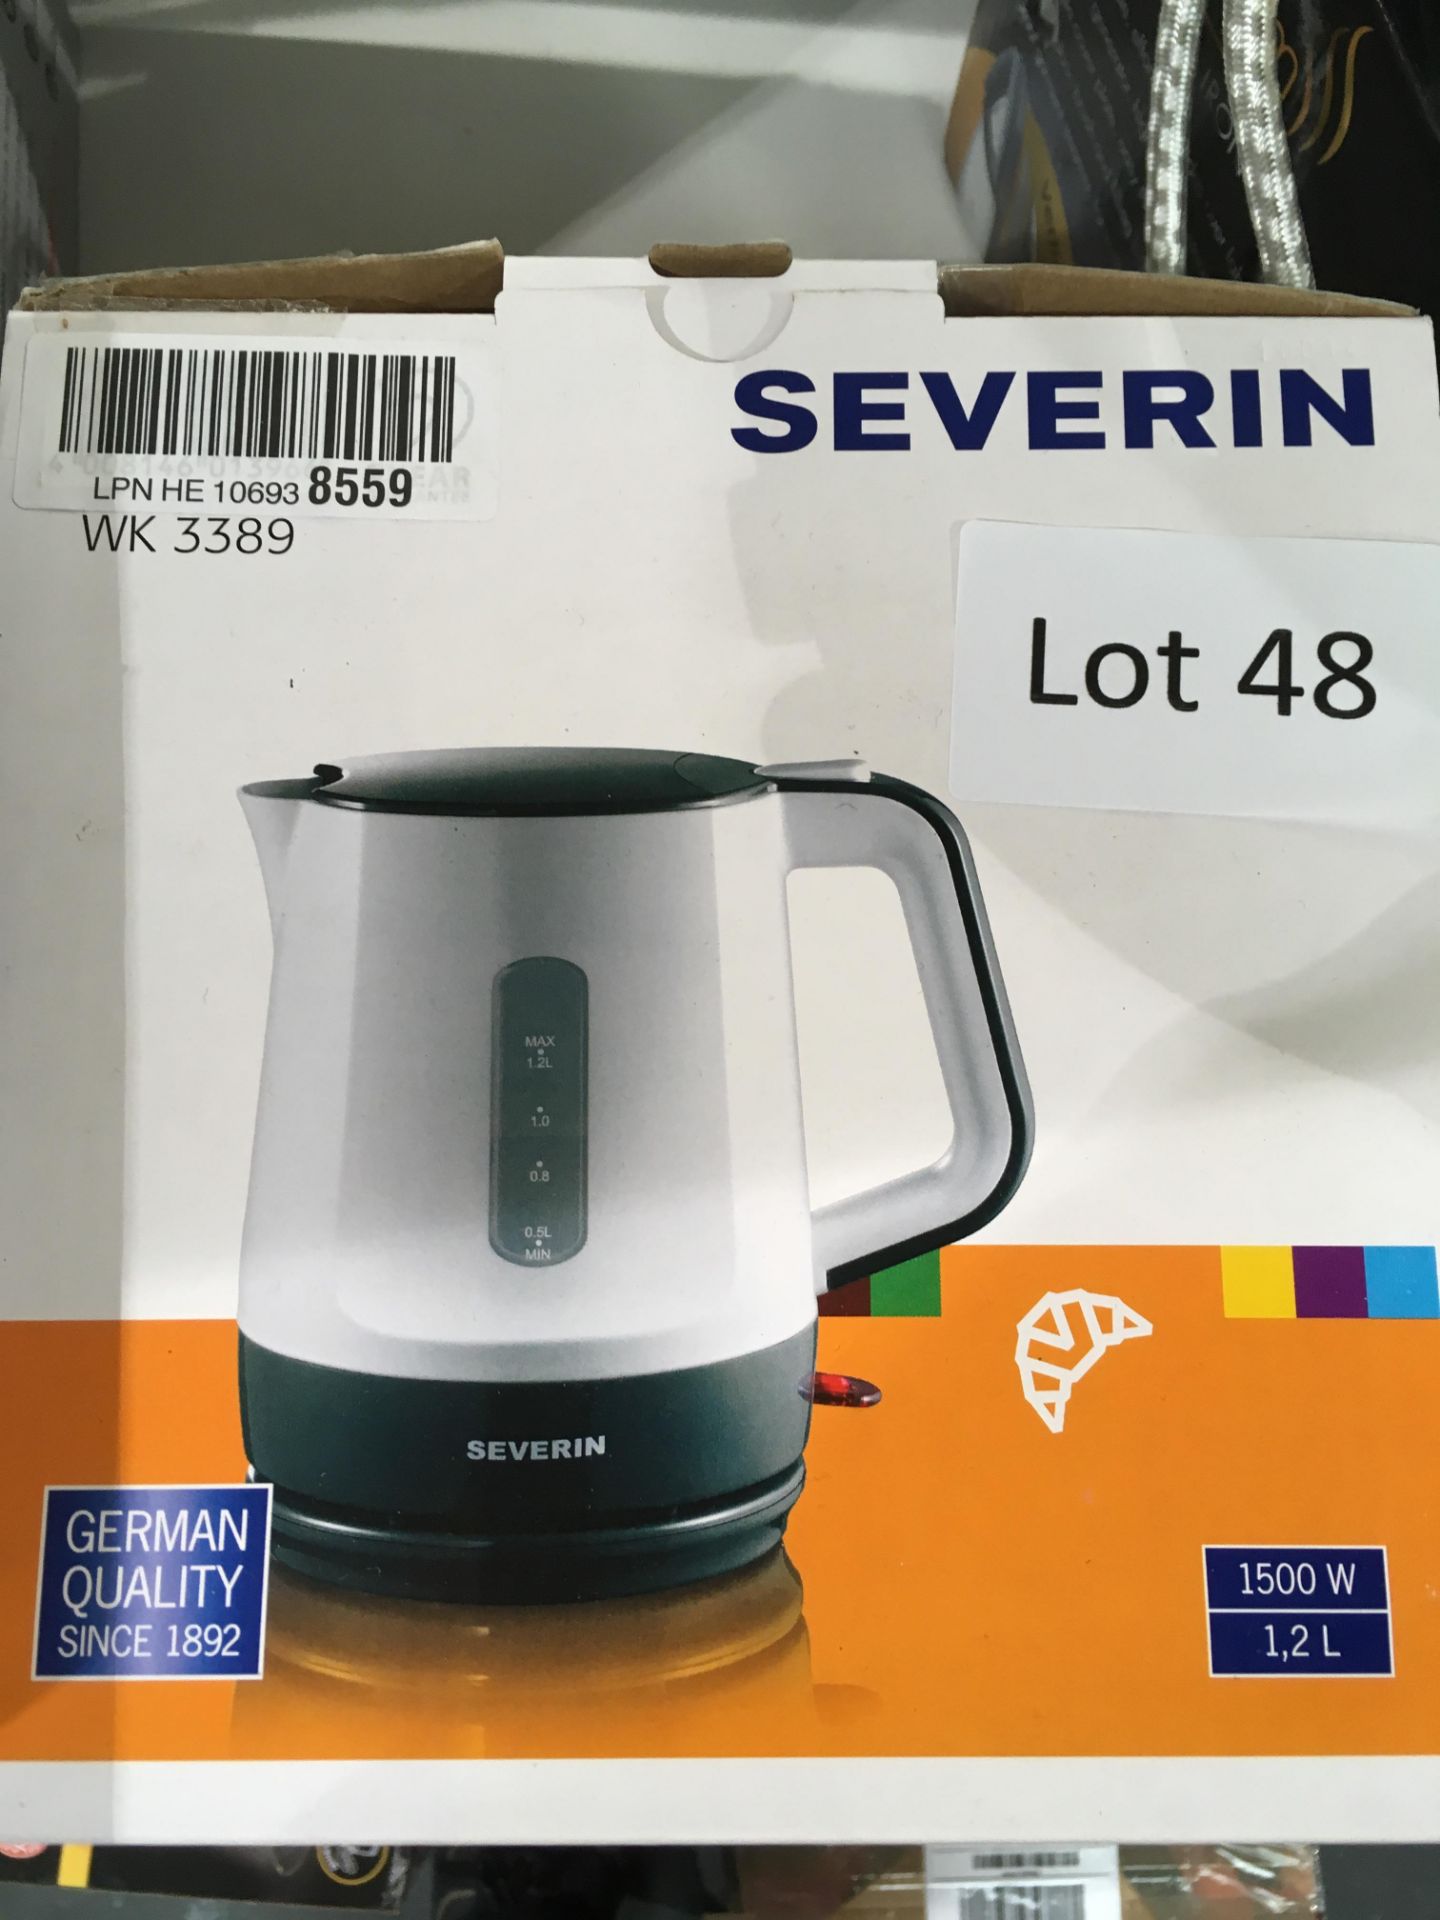 Severin jug kettle. 1500W. Working customer return.